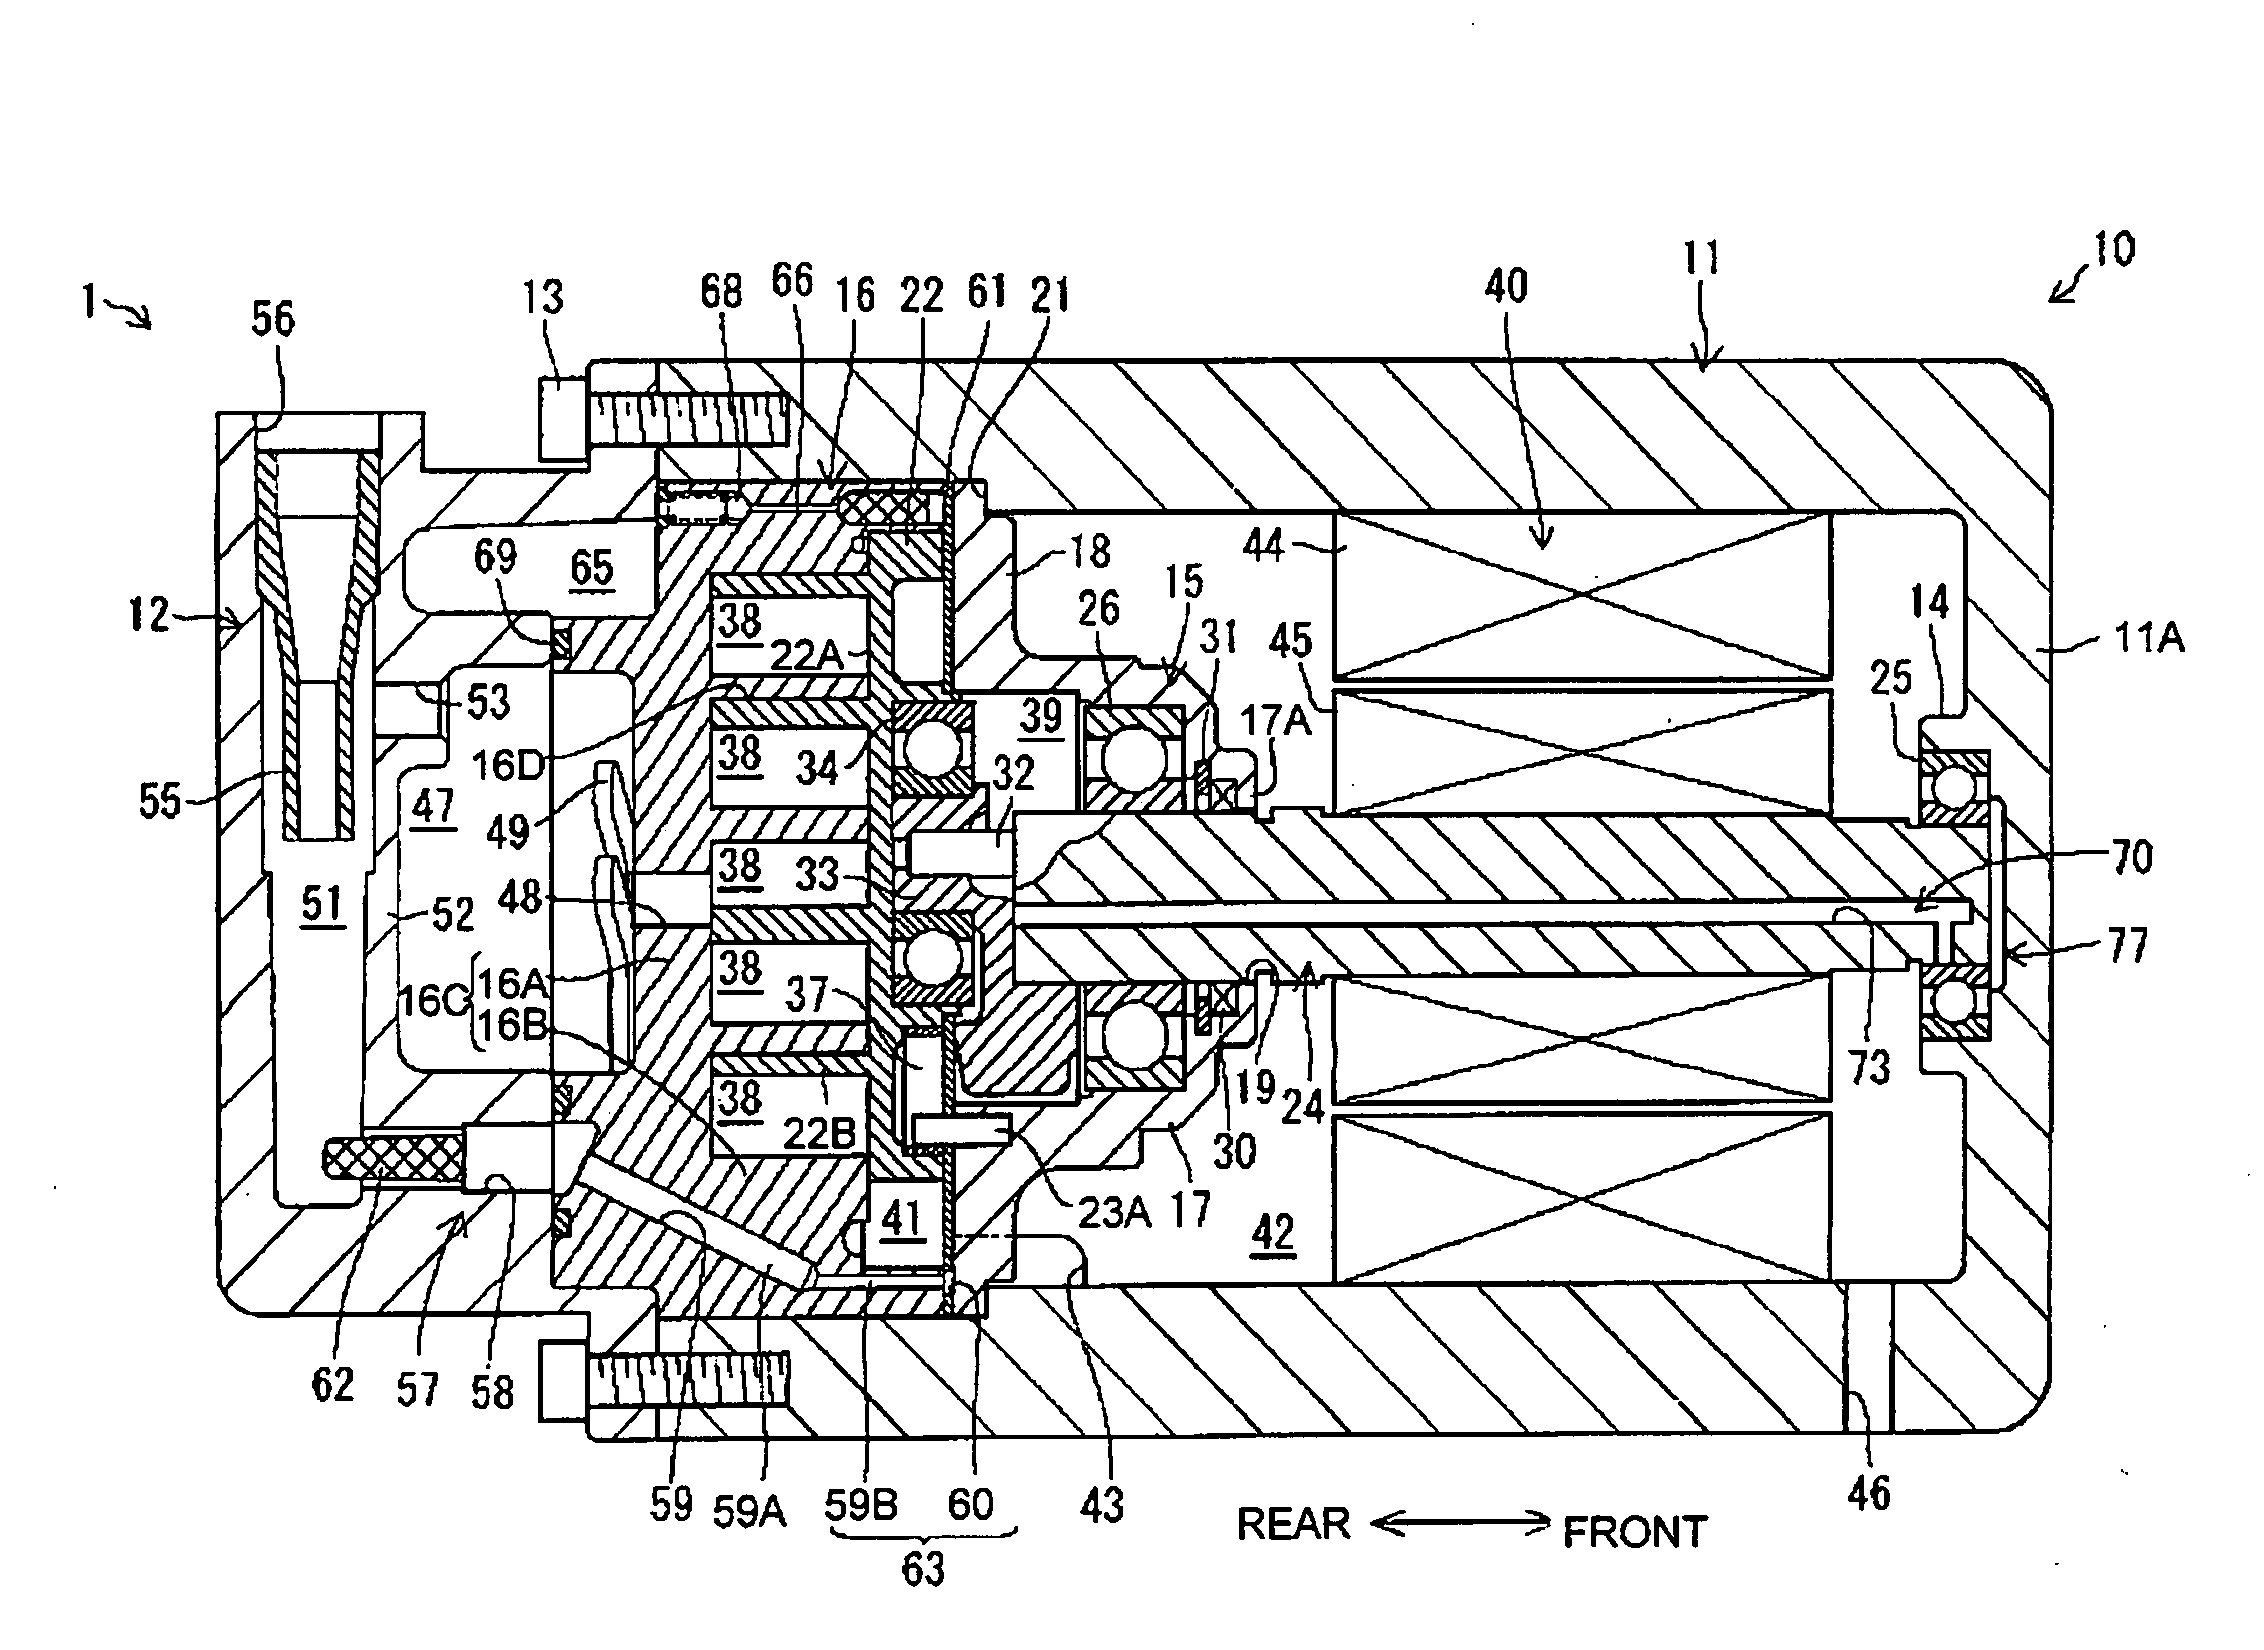 Motor-driven scroll type compressor